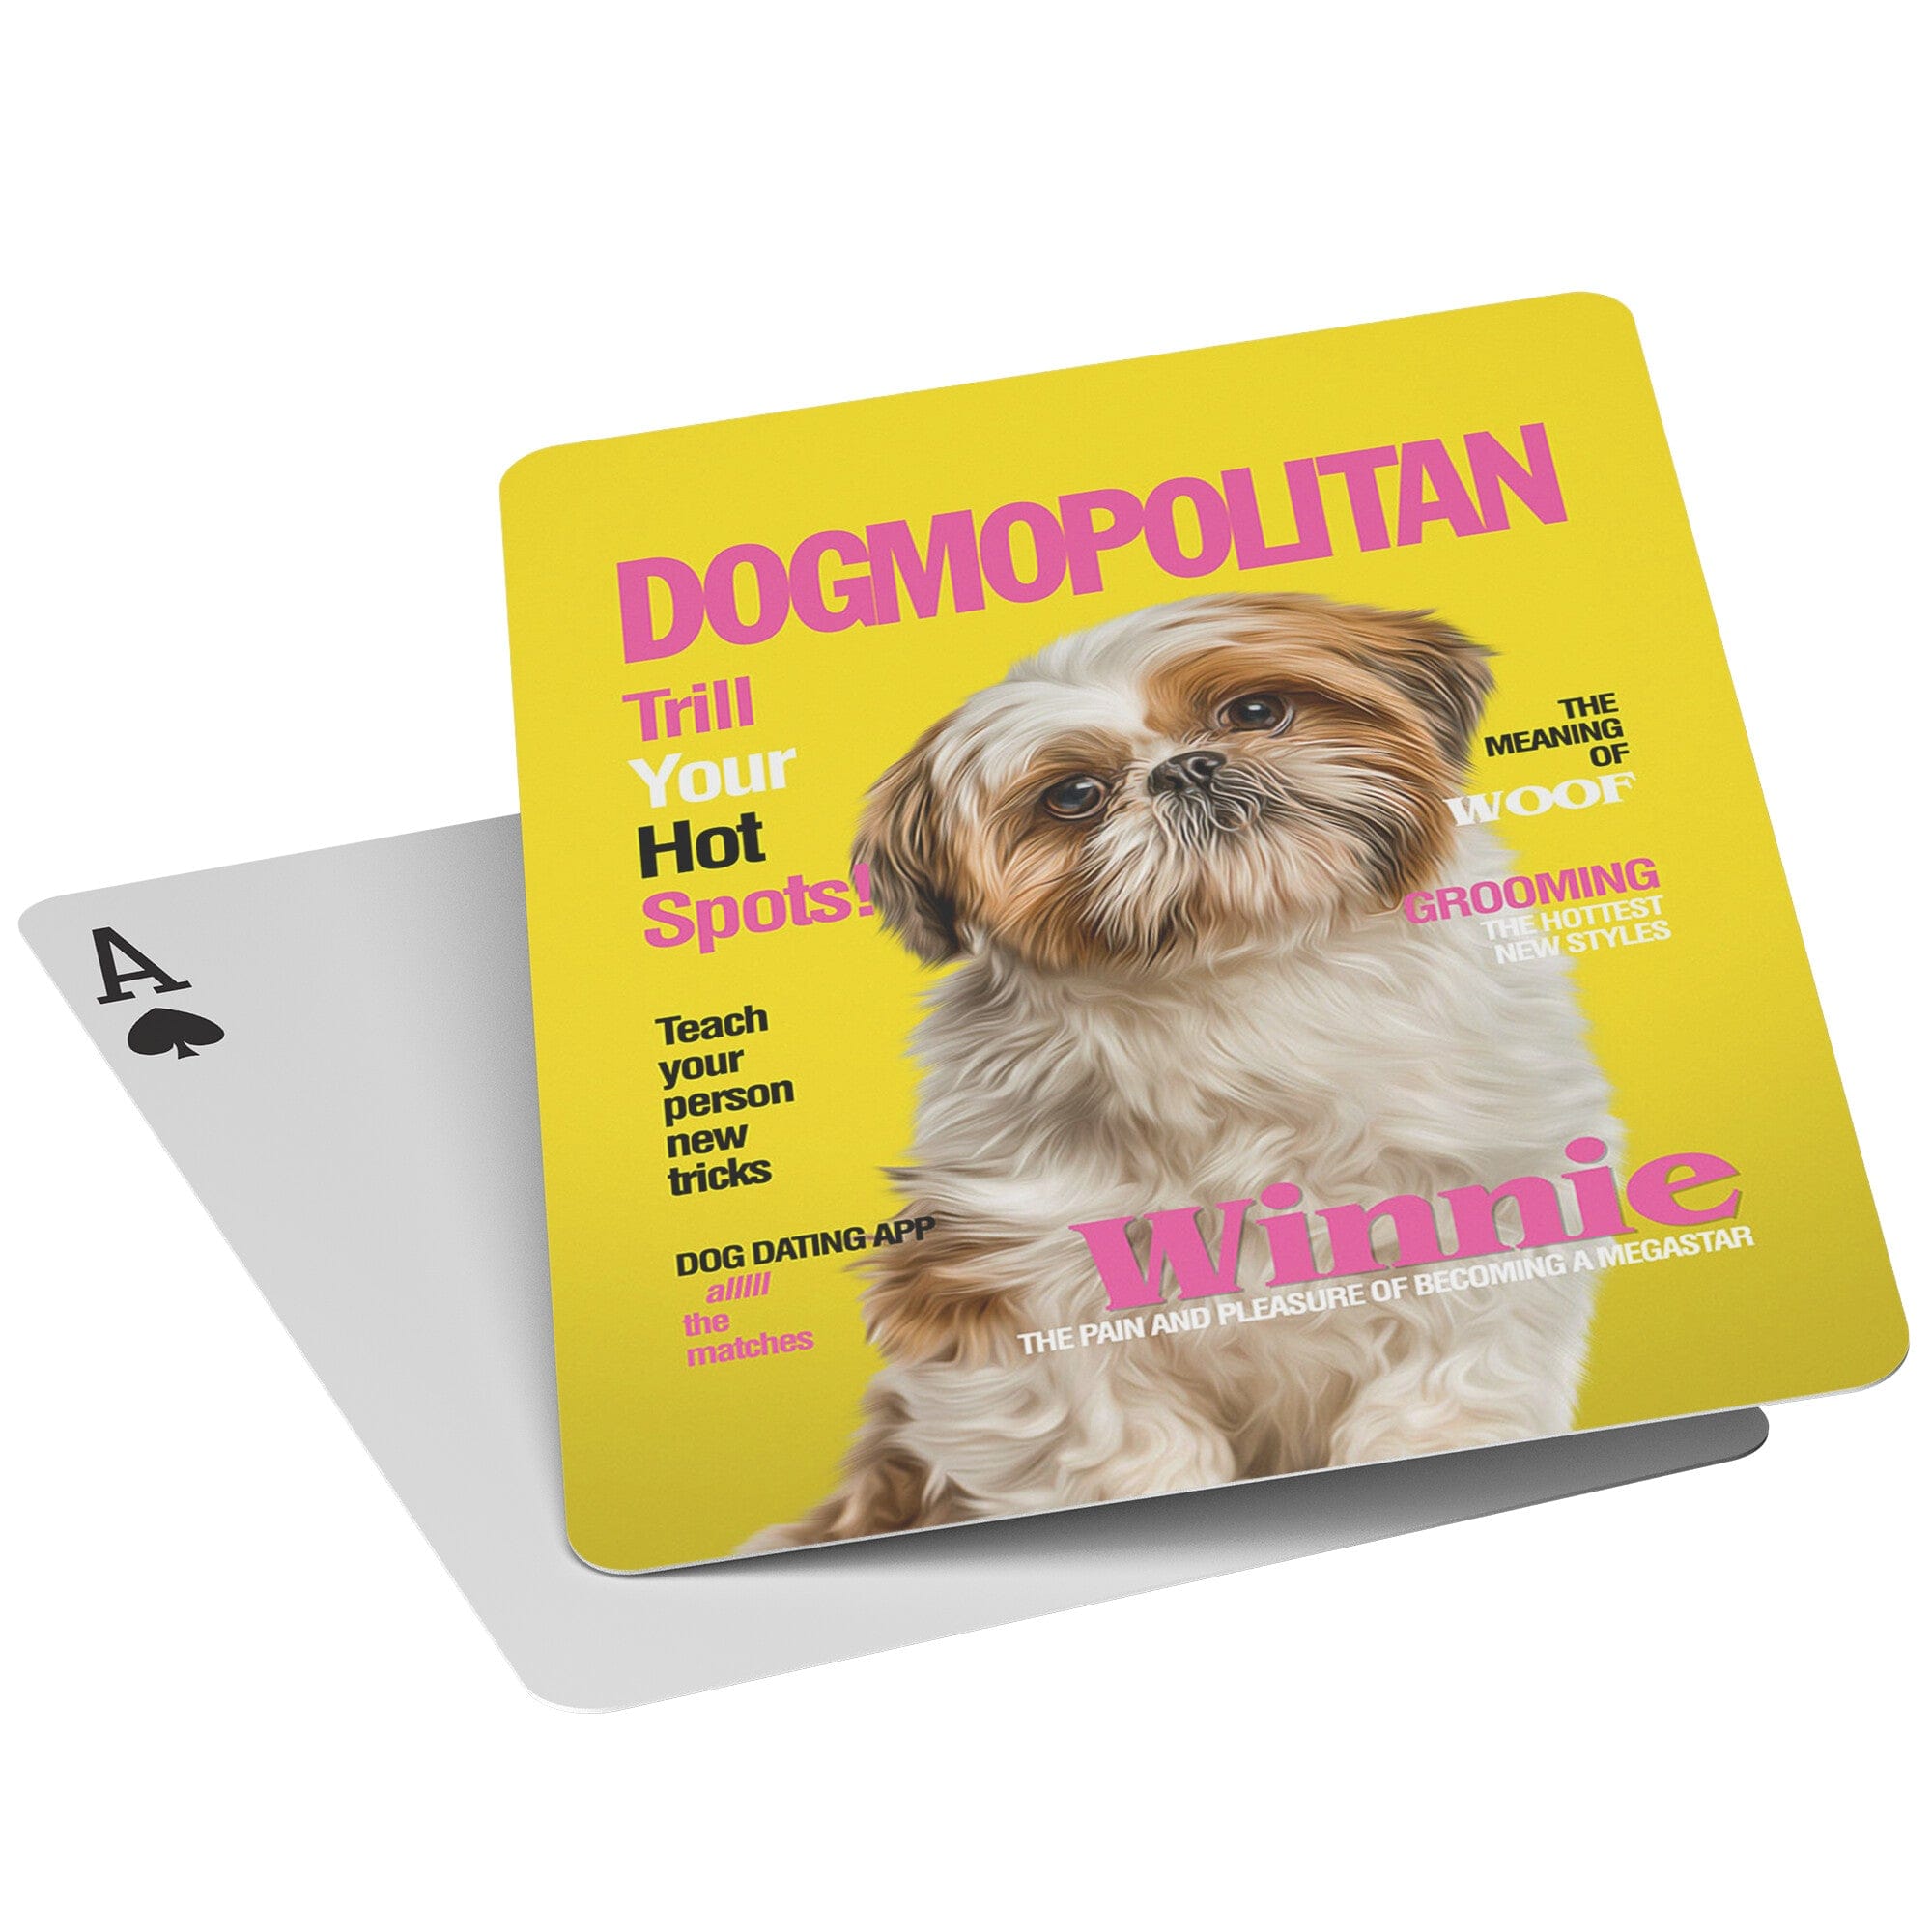 Naipes personalizados para mascotas &#39;Dogmopolitan&#39;